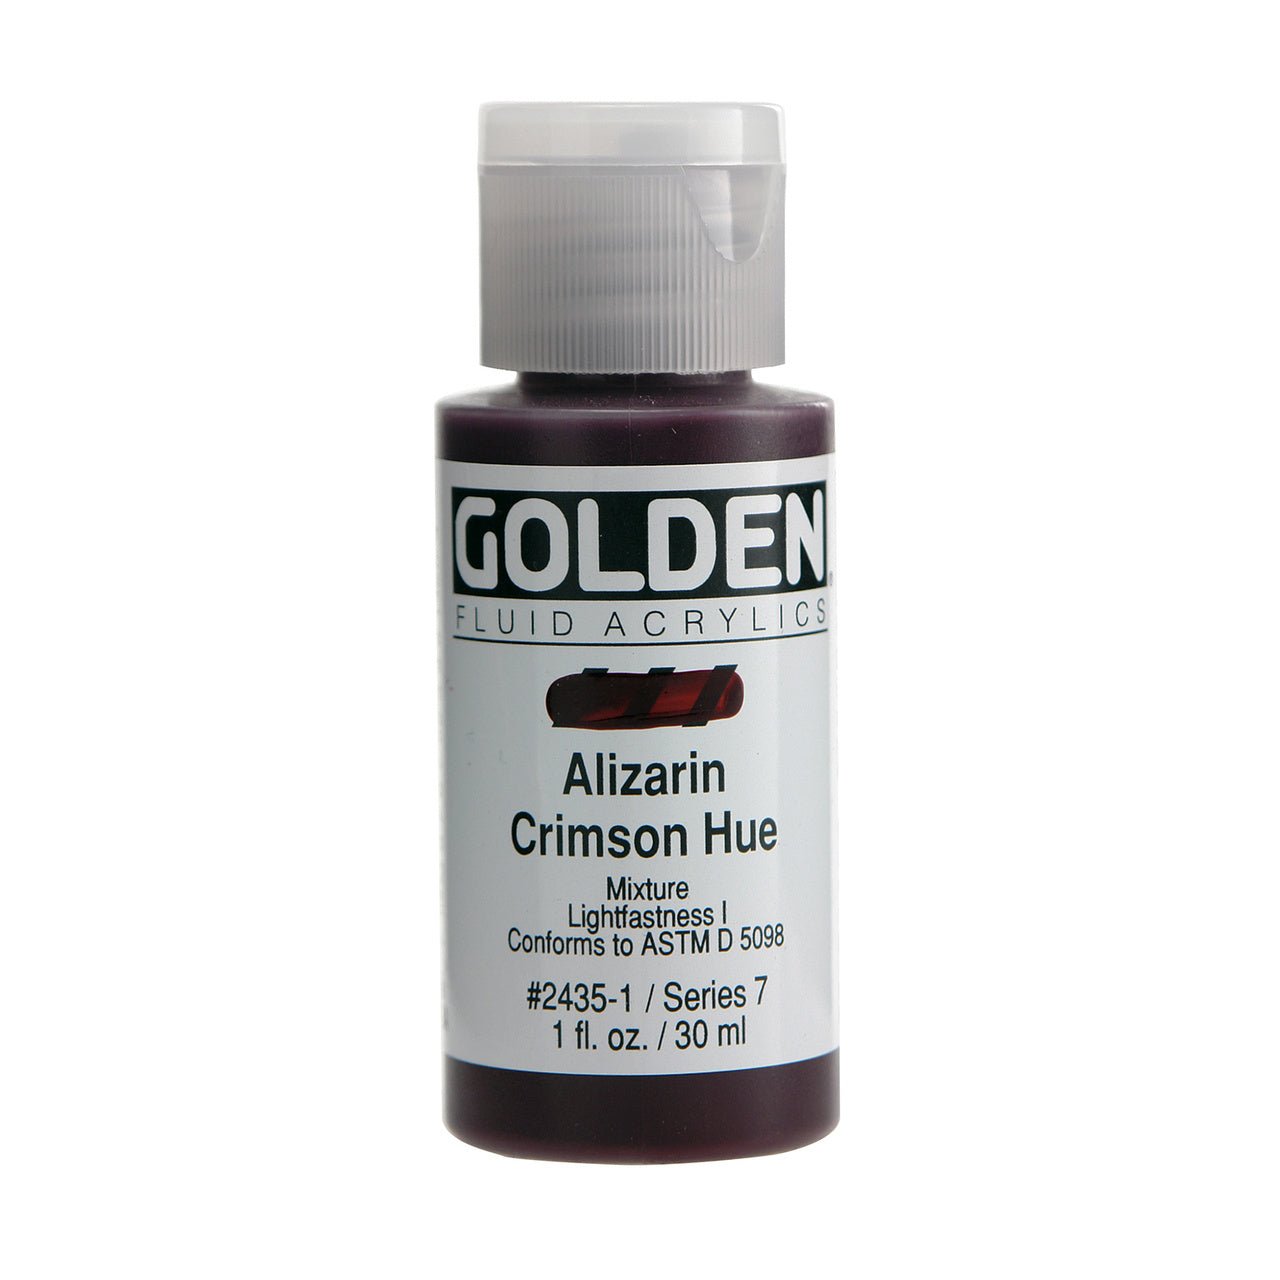 Golden Fluid Acrylic Alizarin Crimson Hue 1 oz - merriartist.com